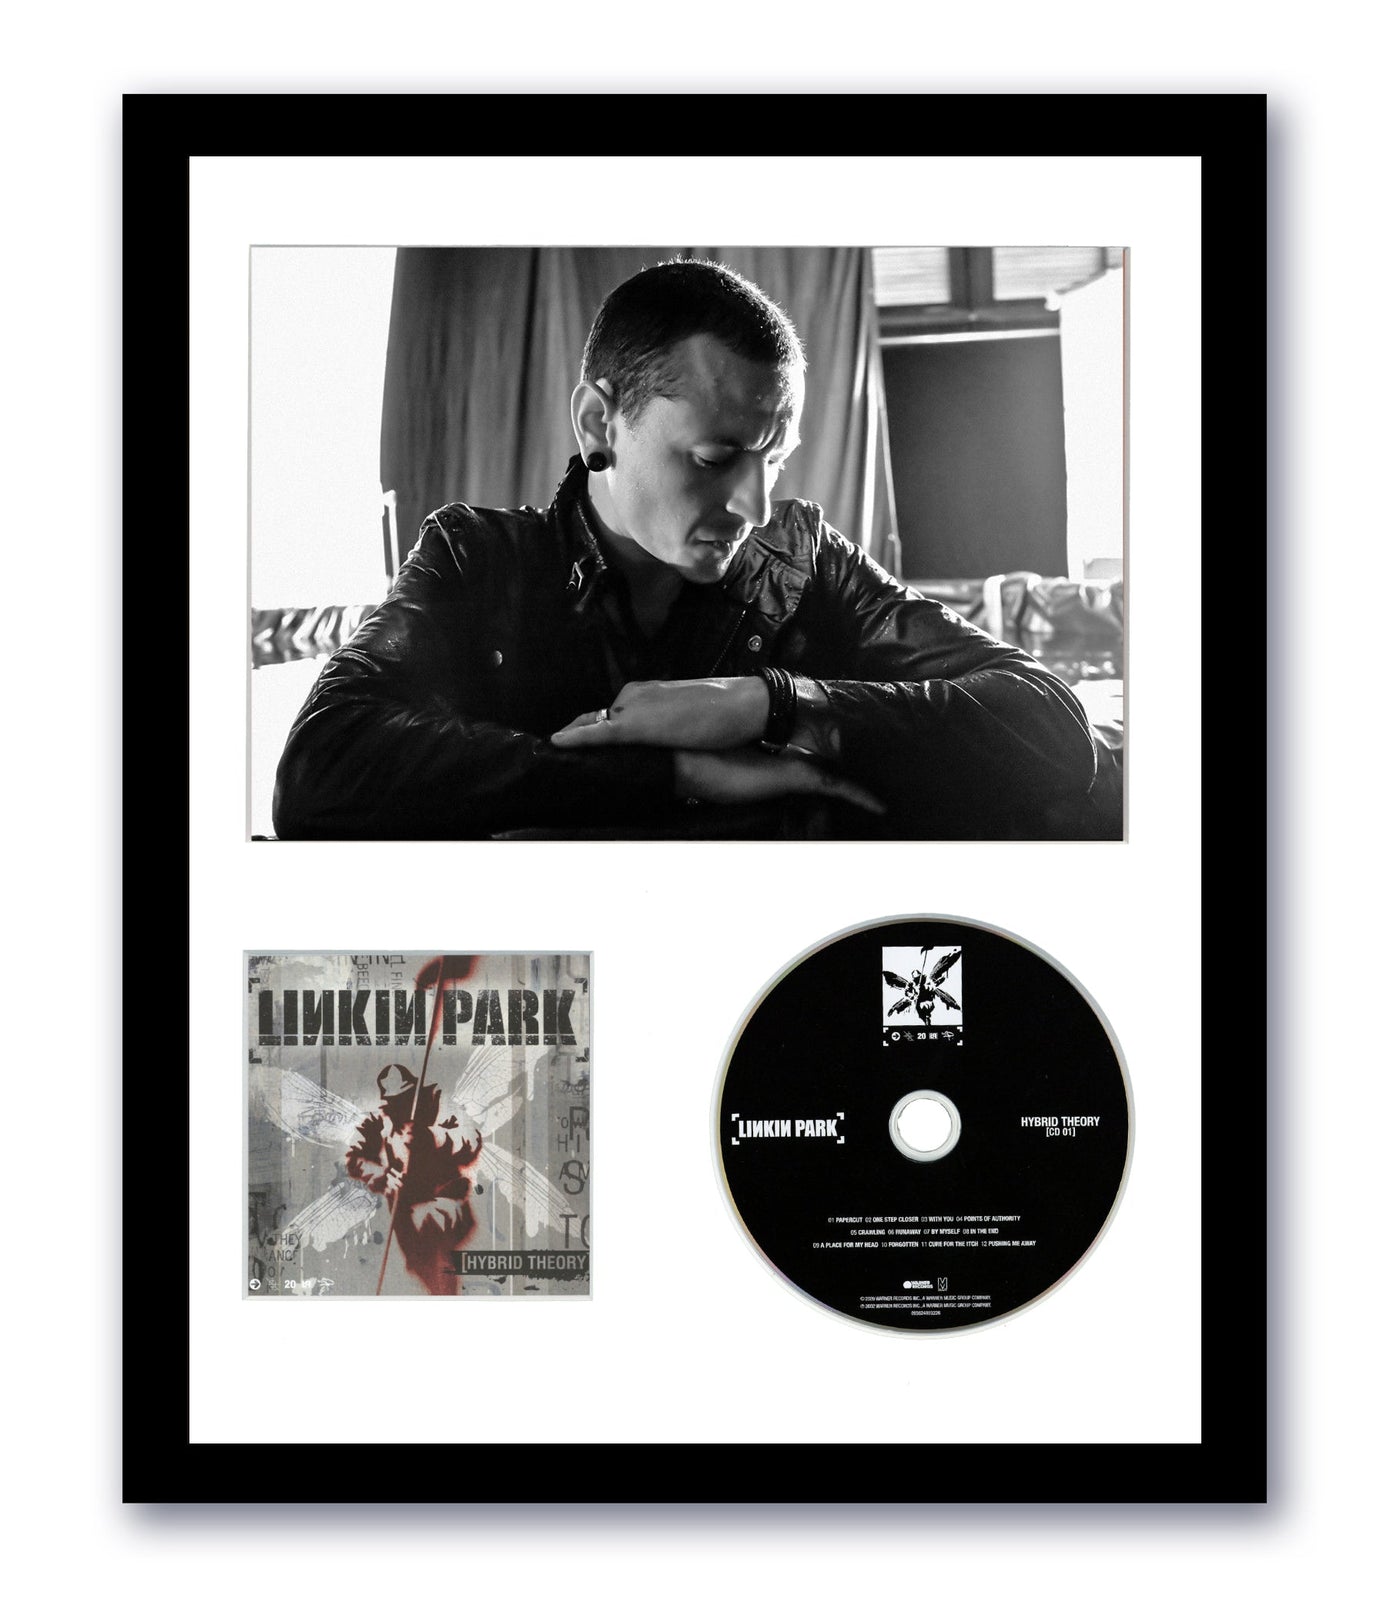 Linkin Park Custom Framed CD Photo Display Hybrid Theory Chester Bennington